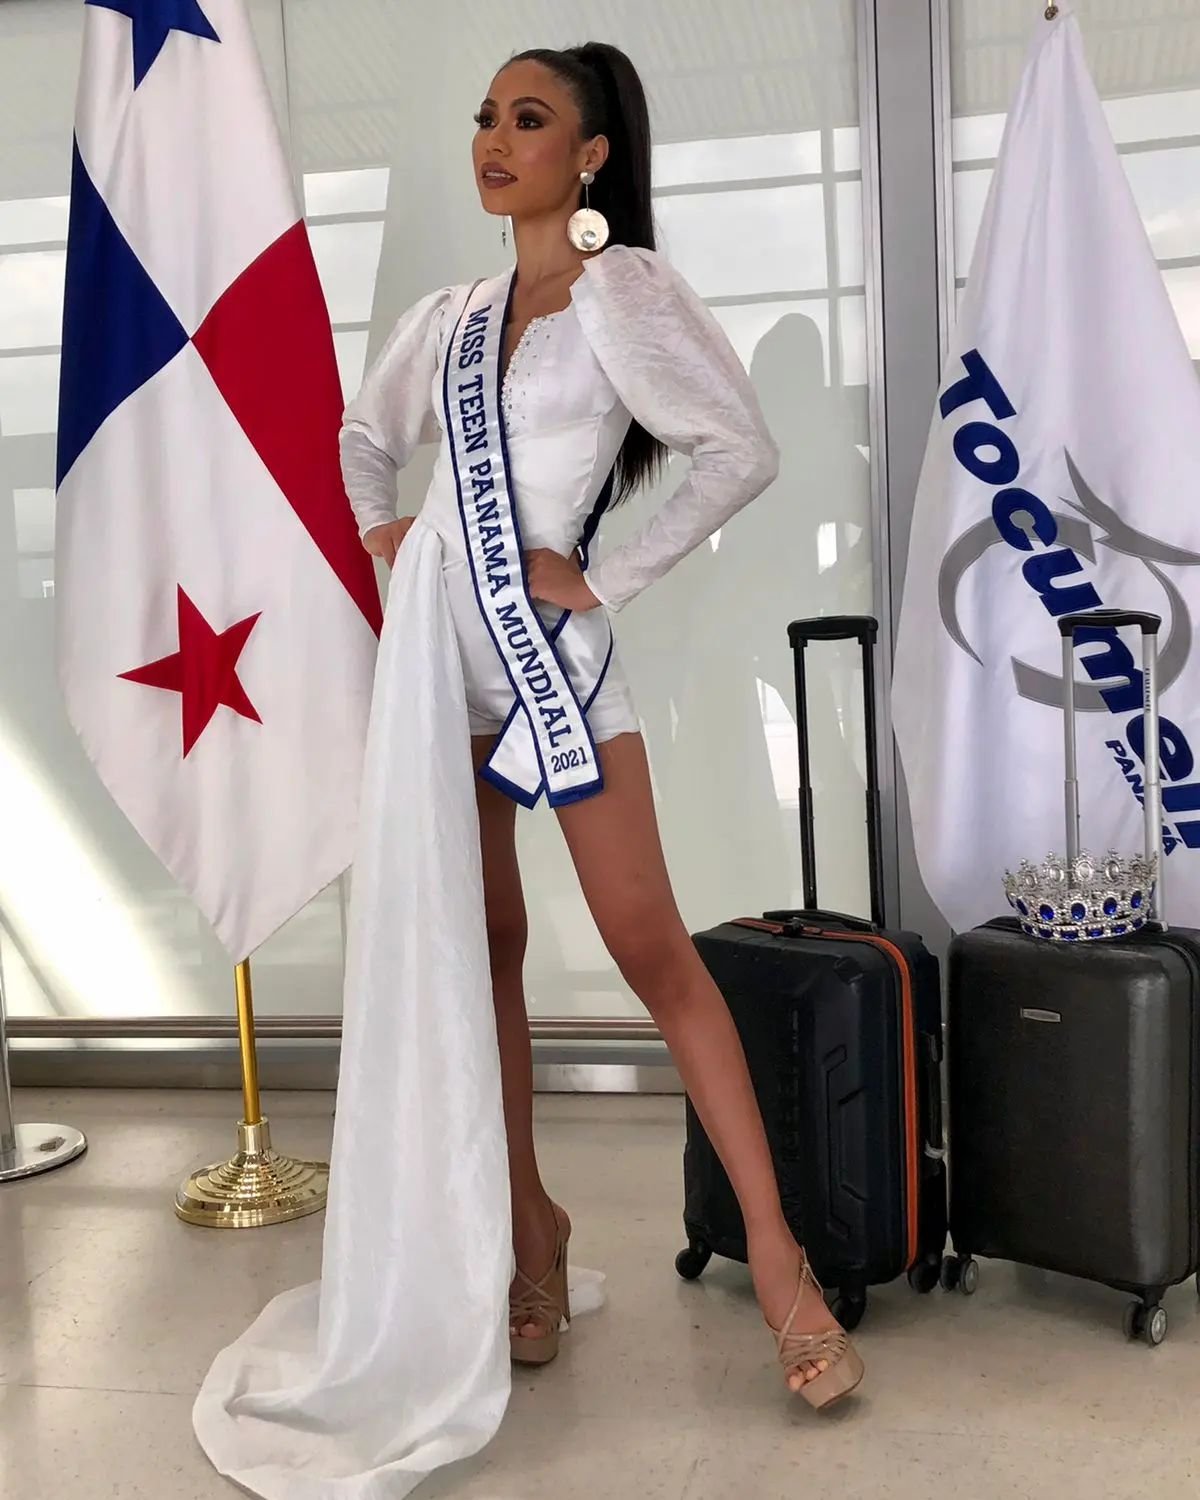 Miss Teen Mundial 2022 kicks off in El Salvador.